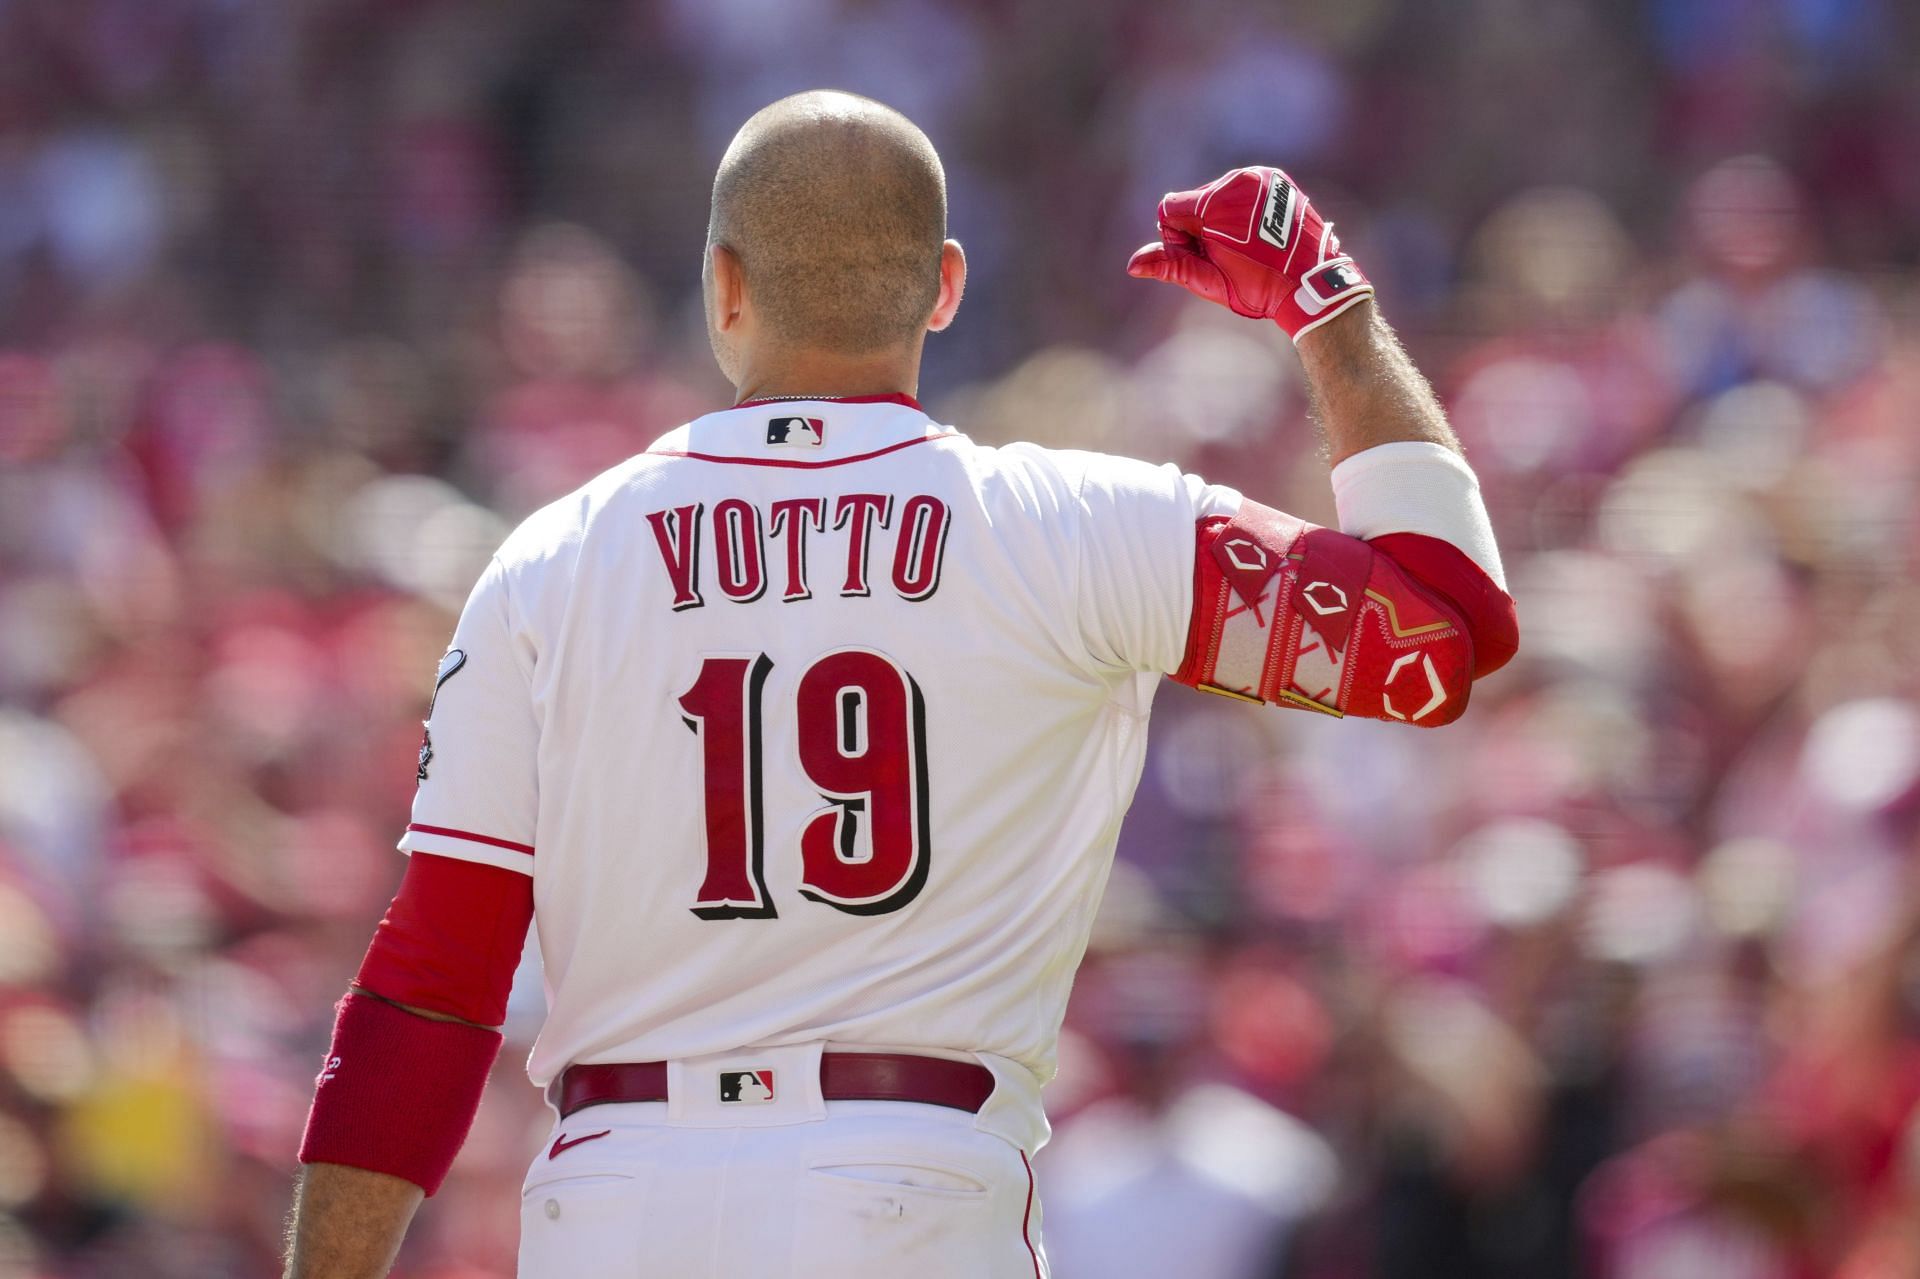 Cincinnati Reds star Joey Votto isn't thinking about retirement